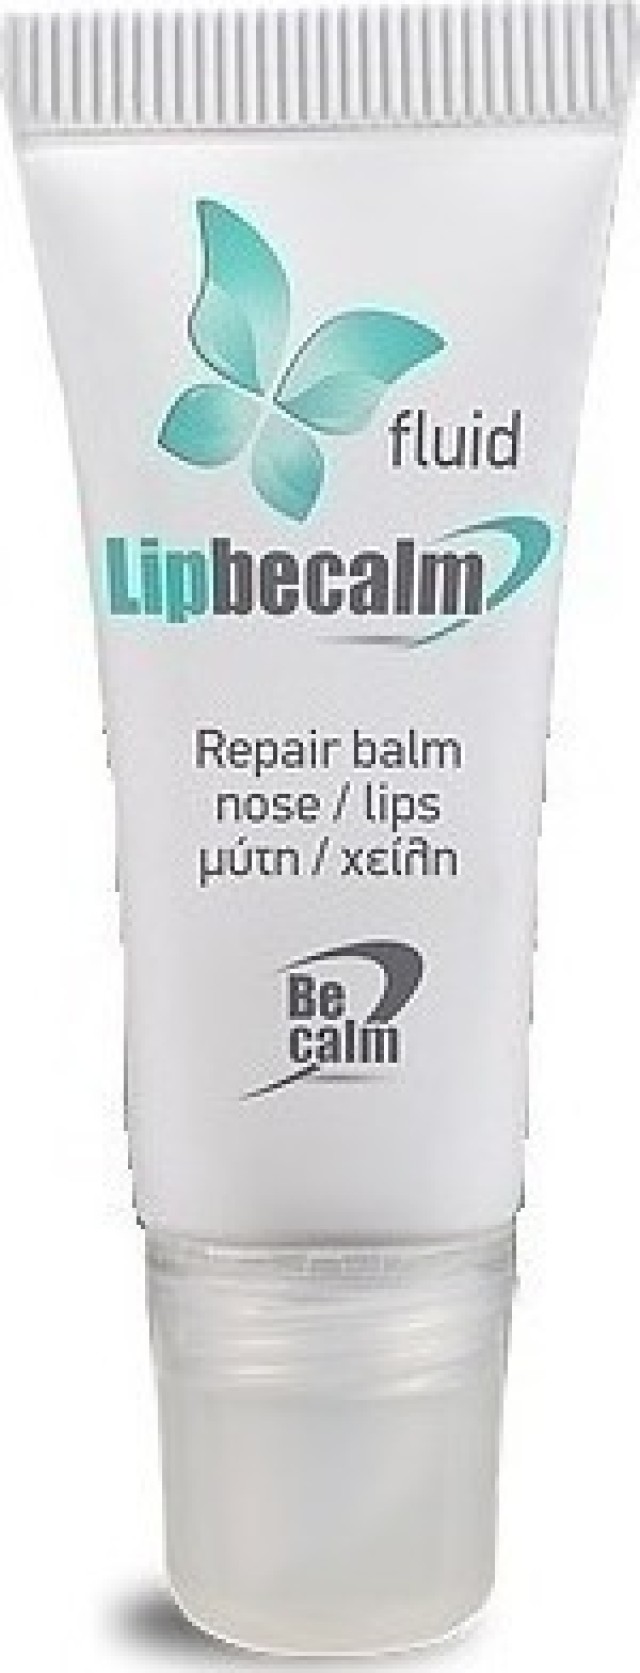 BECALM Lipbecalm Fluid Repair Nose & Lips Balm για την Ξηρότητα, τα Σκασίματα & τους Ερεθισμούς σε Μύτη & Χείλια, 10ml